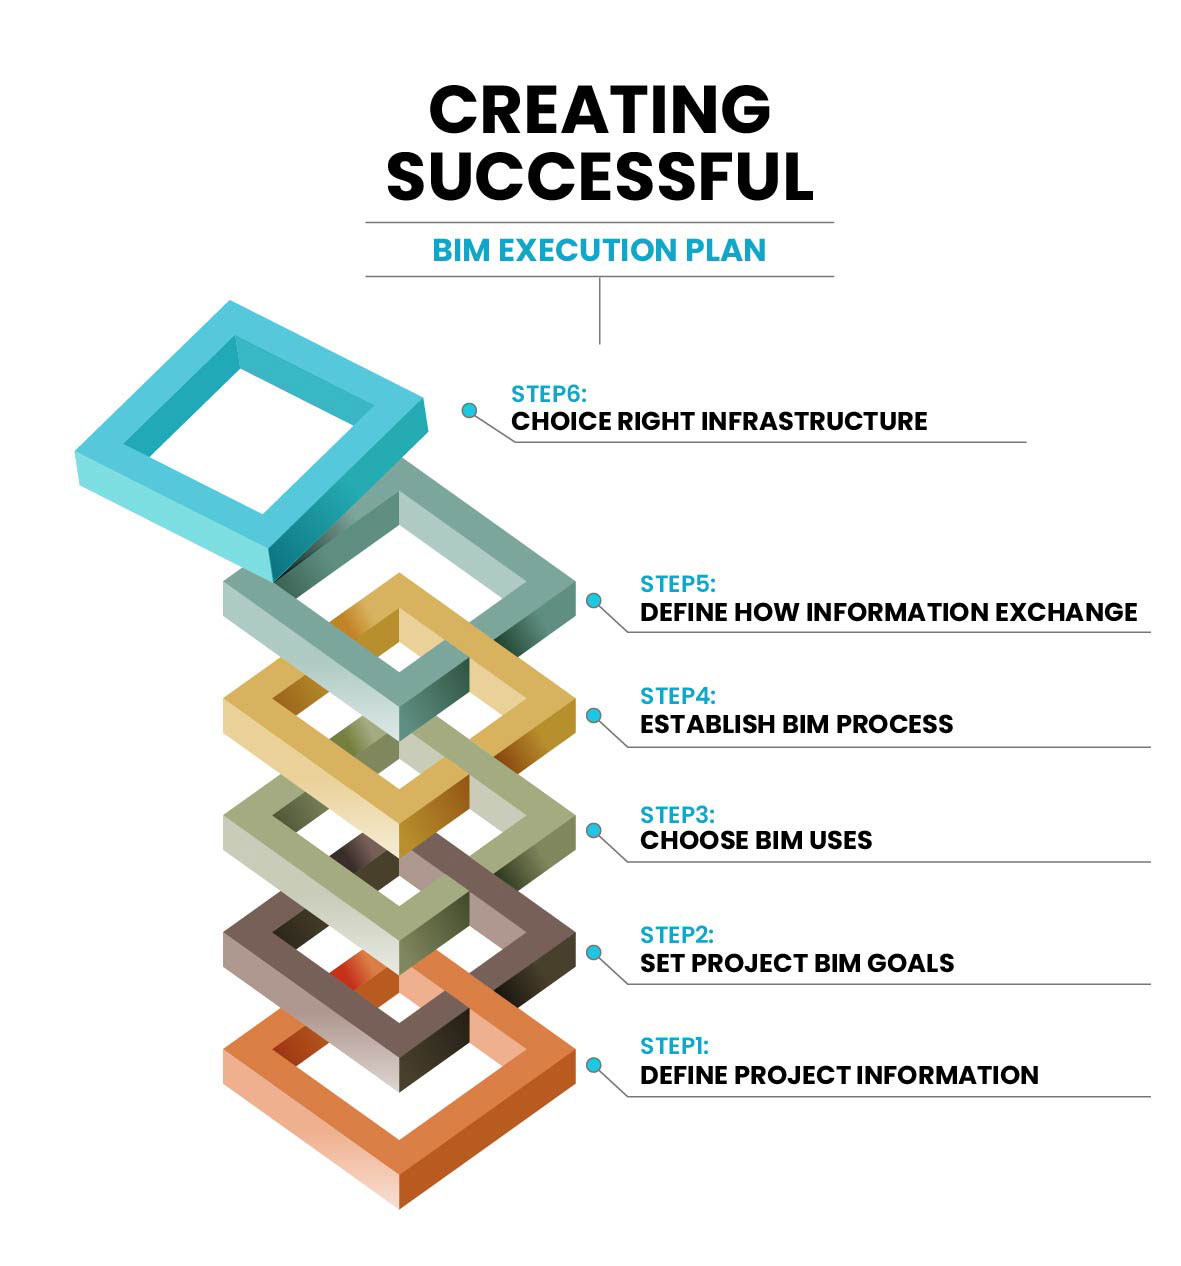 BIM Execution Plan - How to Design a Successful BEP Model